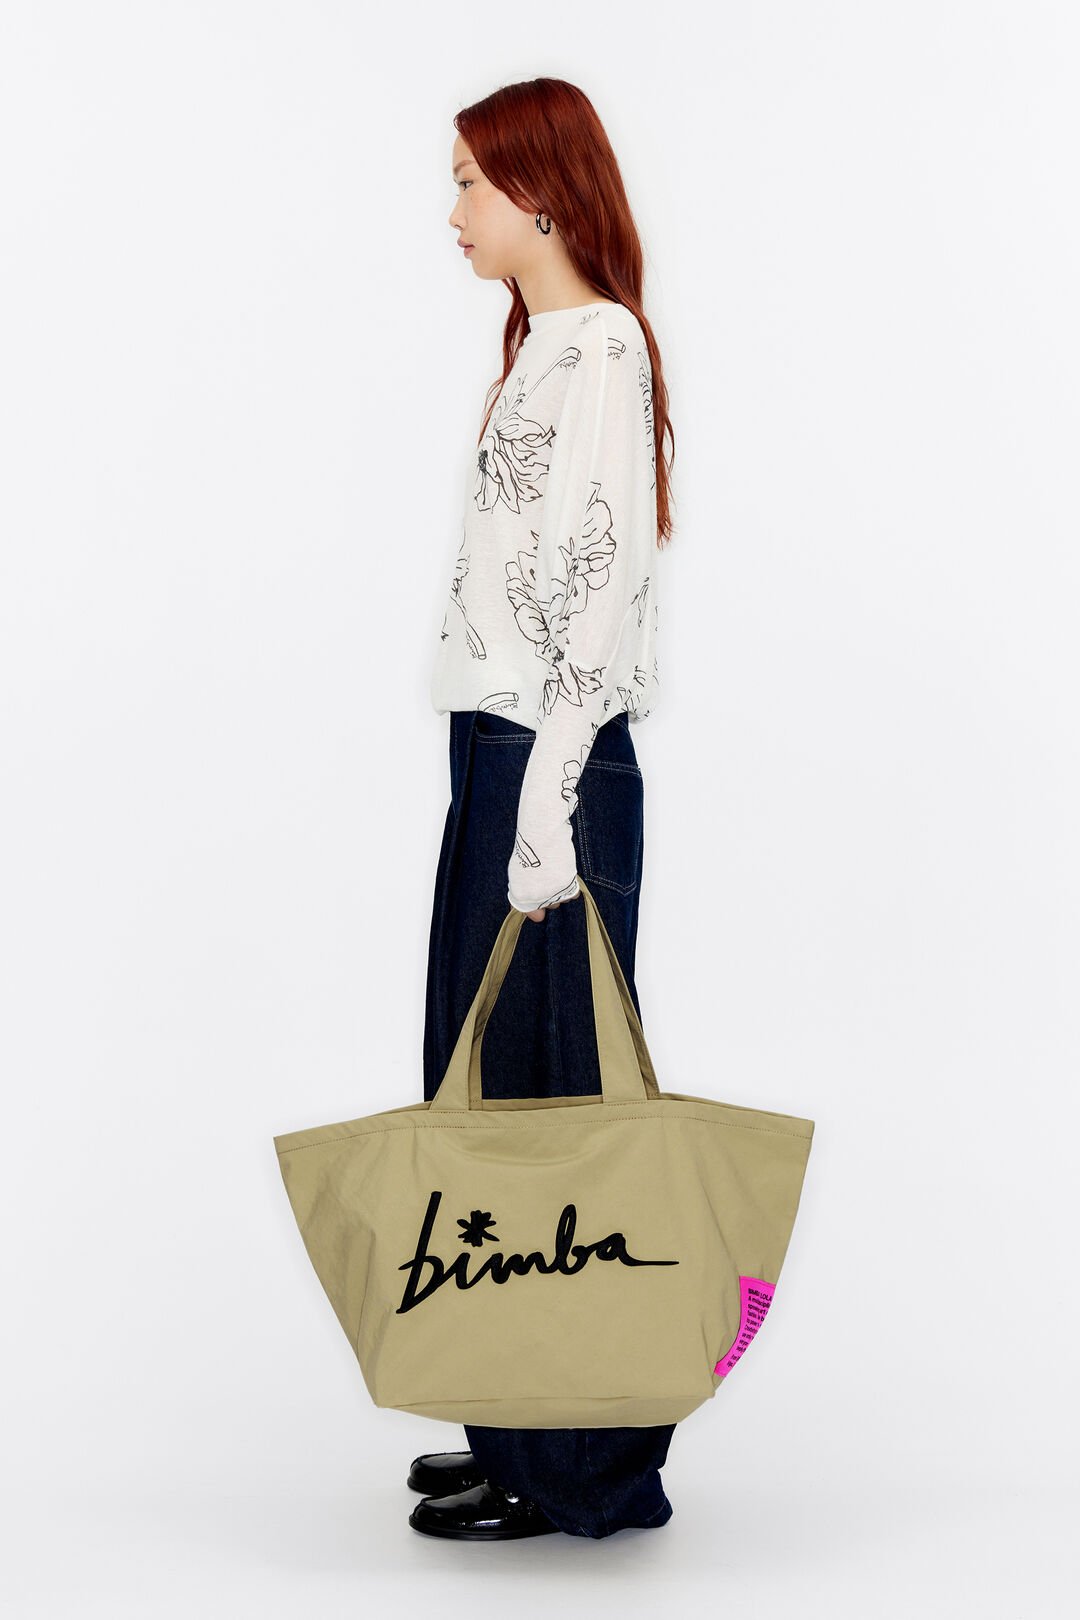 Bimba Y Lola mini tote bag- black color, Women's Fashion, Bags